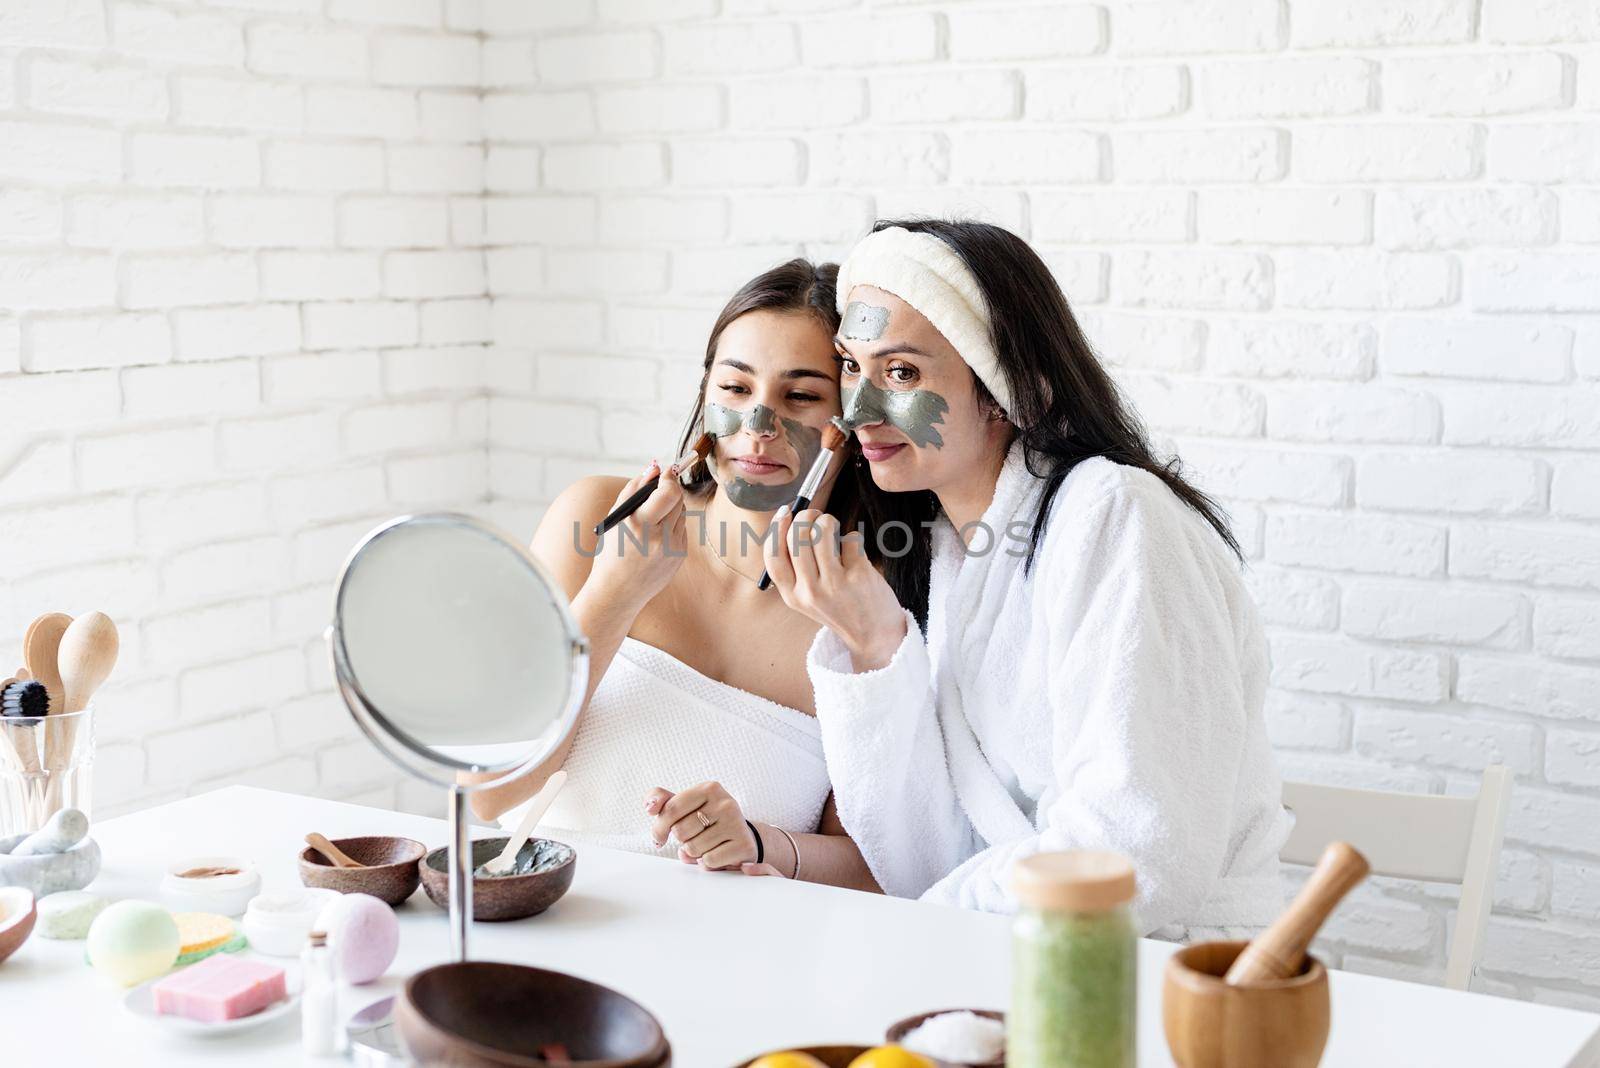 Spa and wellness concept. Self care. two beautiful women applying facial mask having fun